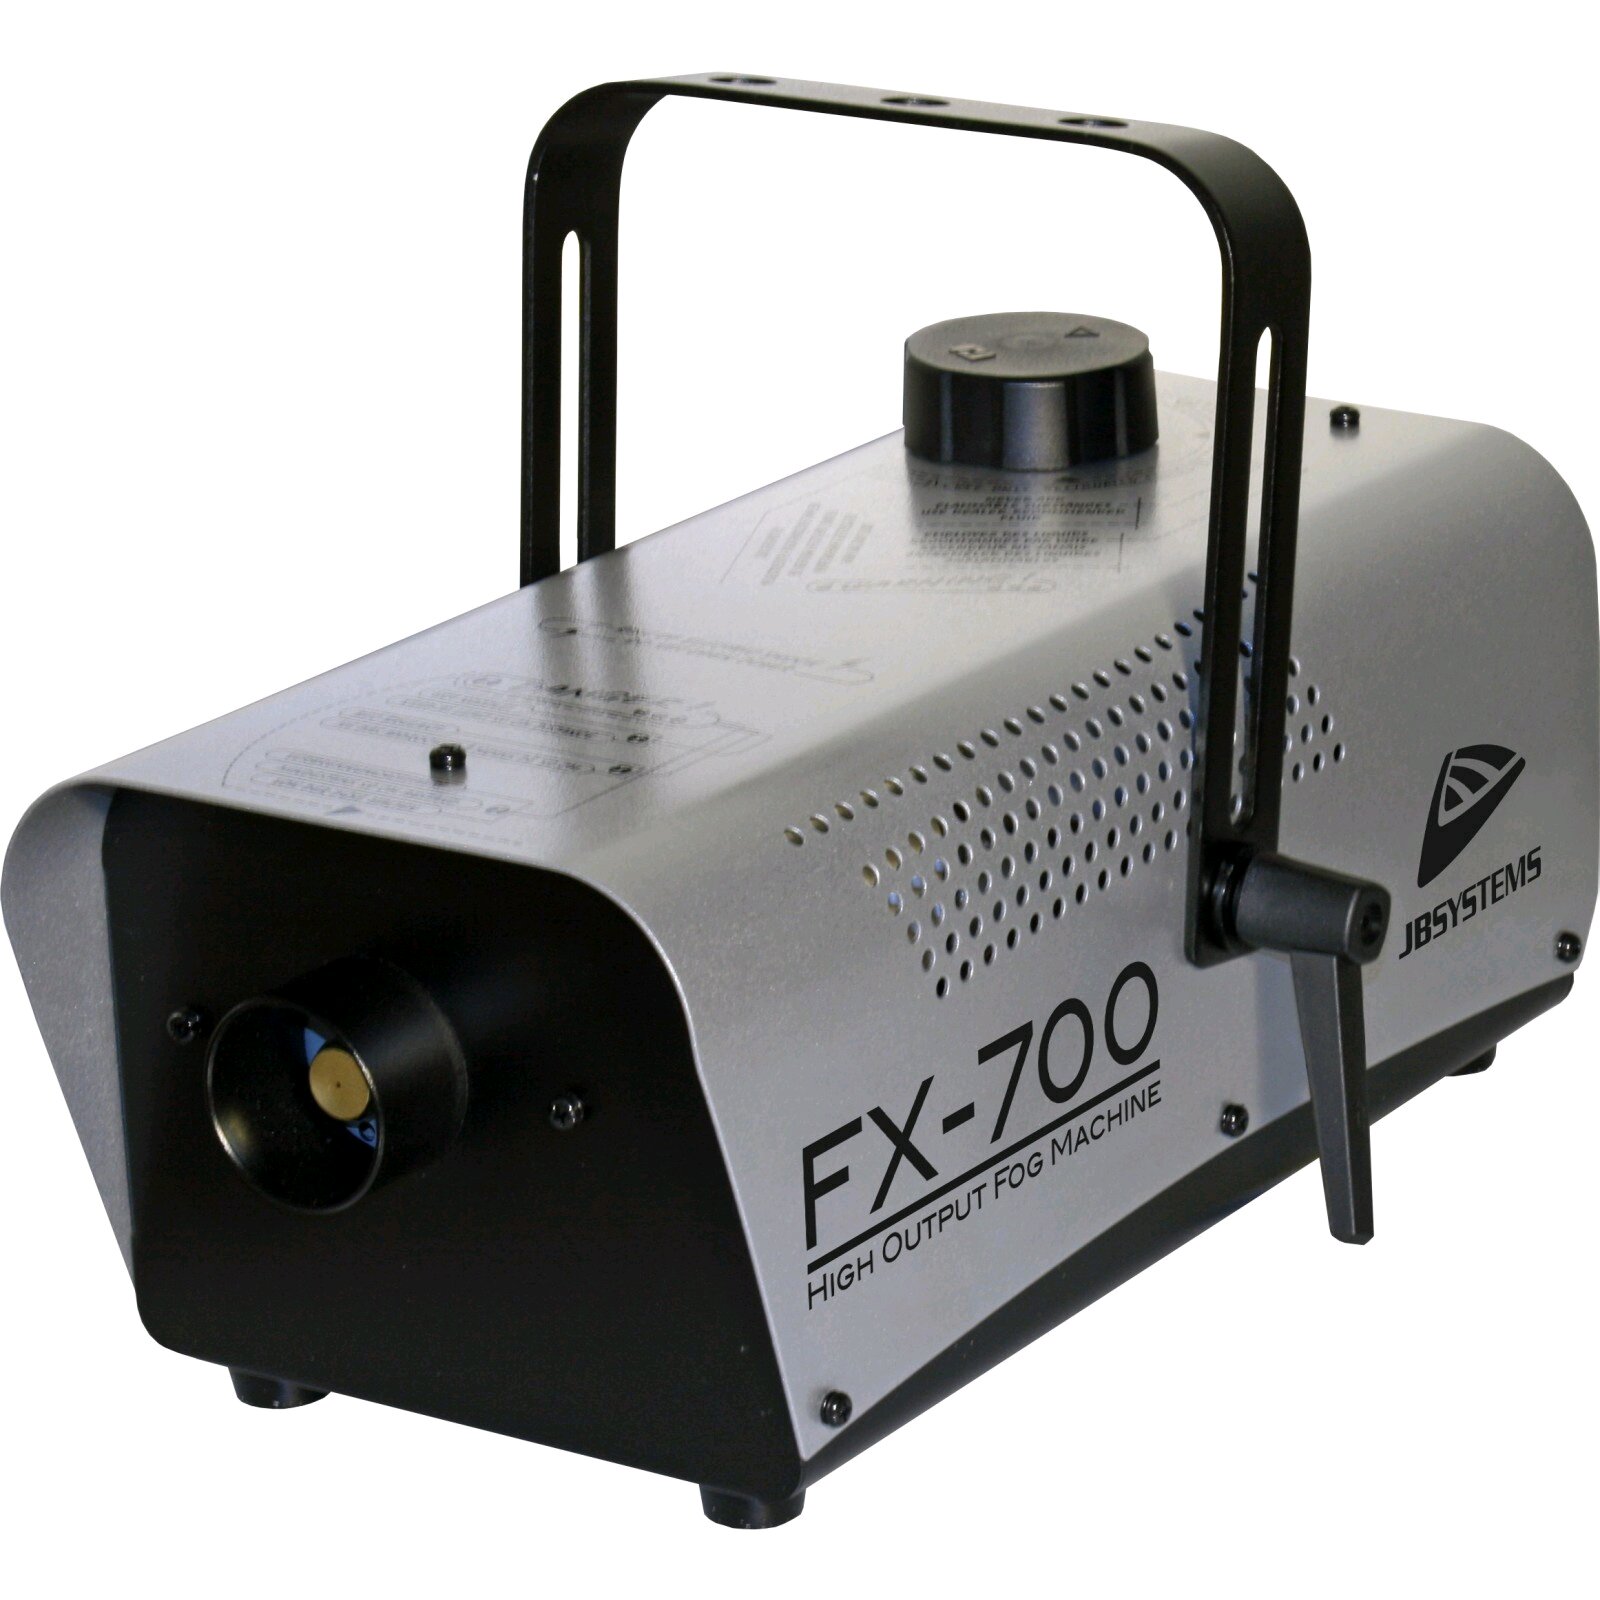 JBSYSTEMS FX-700 - Fog Fog Machine 700 Watt, incl. on / off remote : photo 1